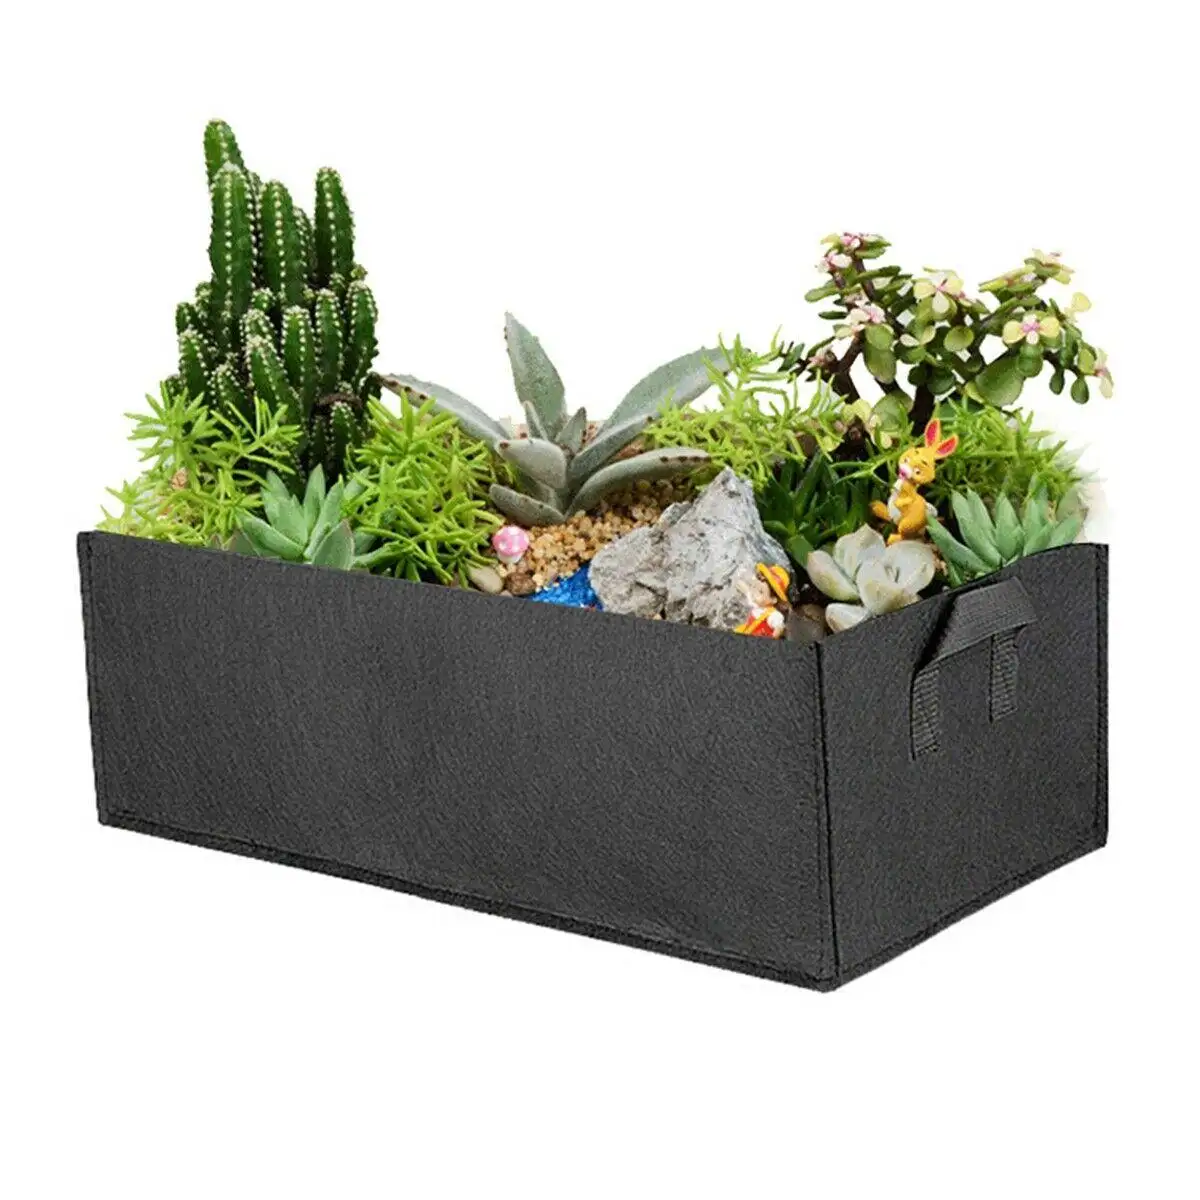 4x4 4x8 4x16 6x16 Customized Black Tan Non Woven Fabric Pot Raised Bed Felt Flower Plant Hemp Grow bags Pot